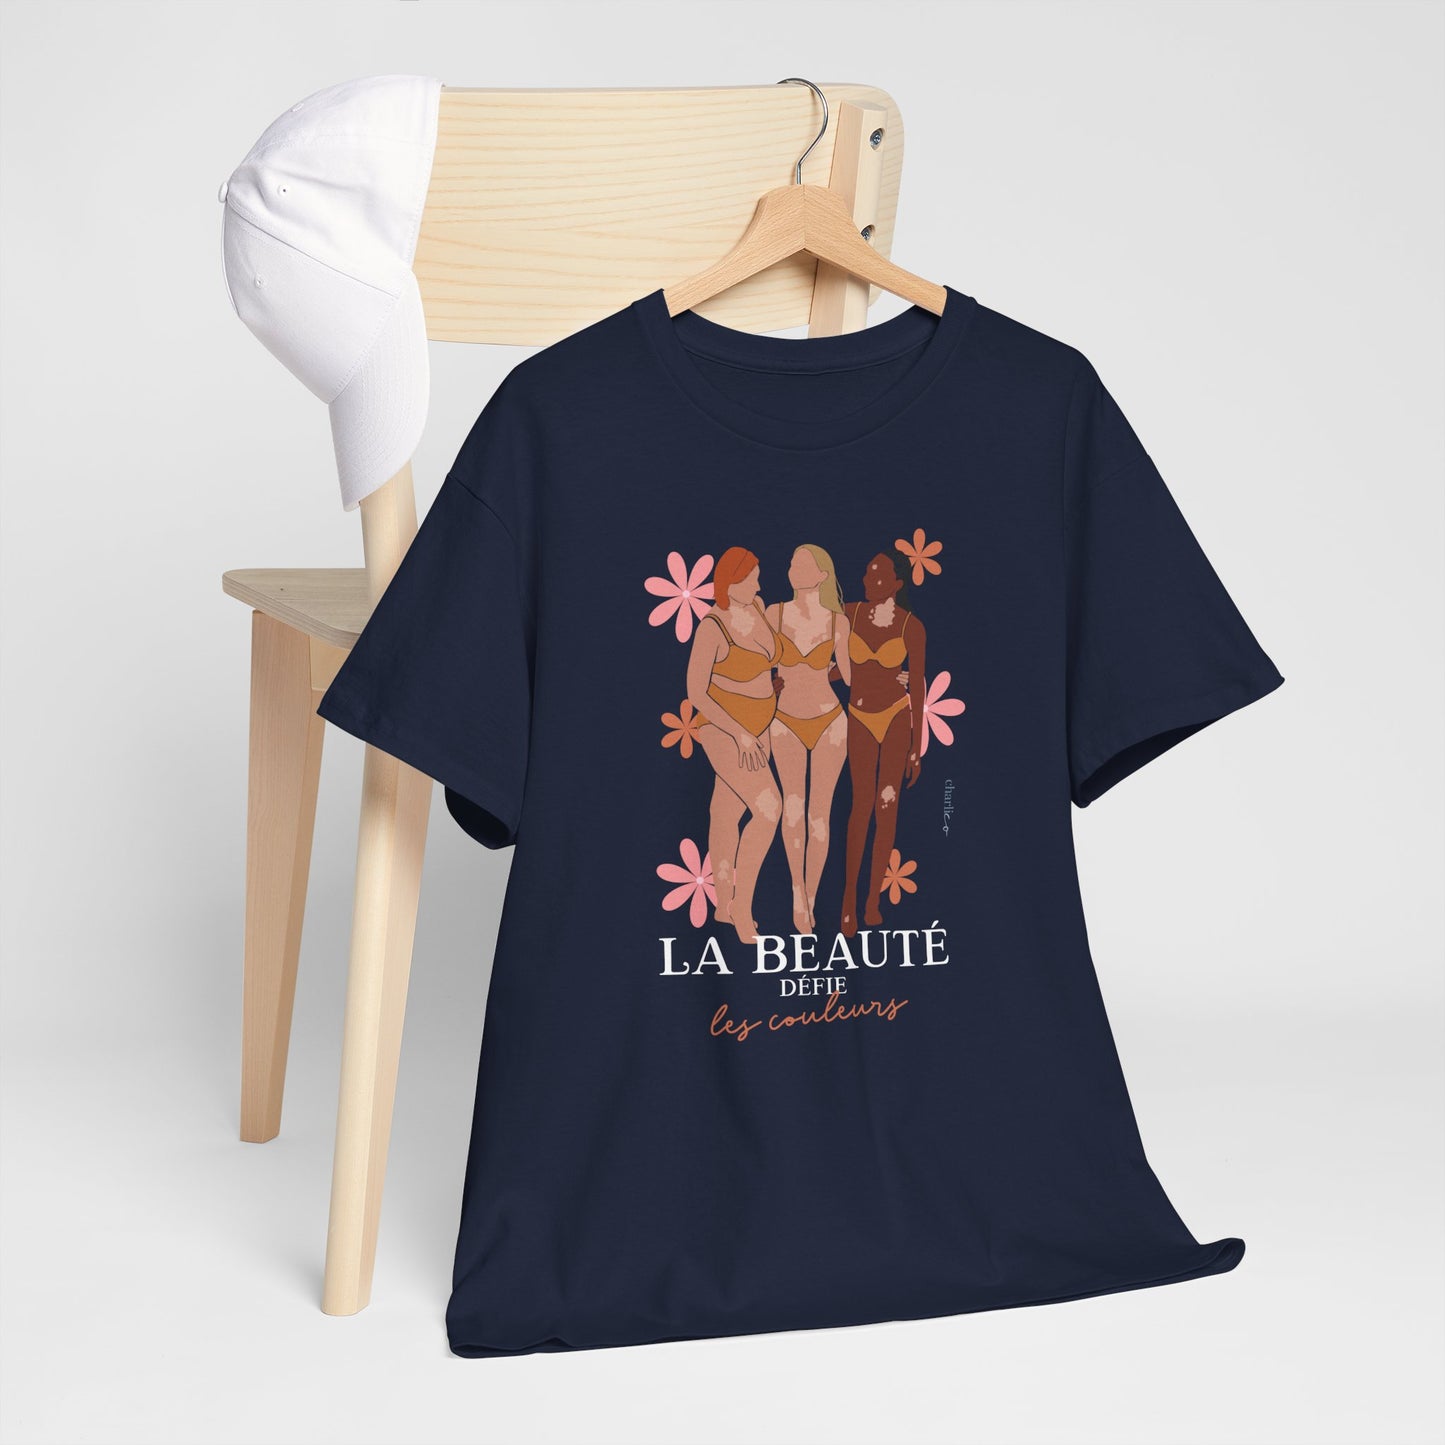 Printable t-shirt -VITILIGO- for adults